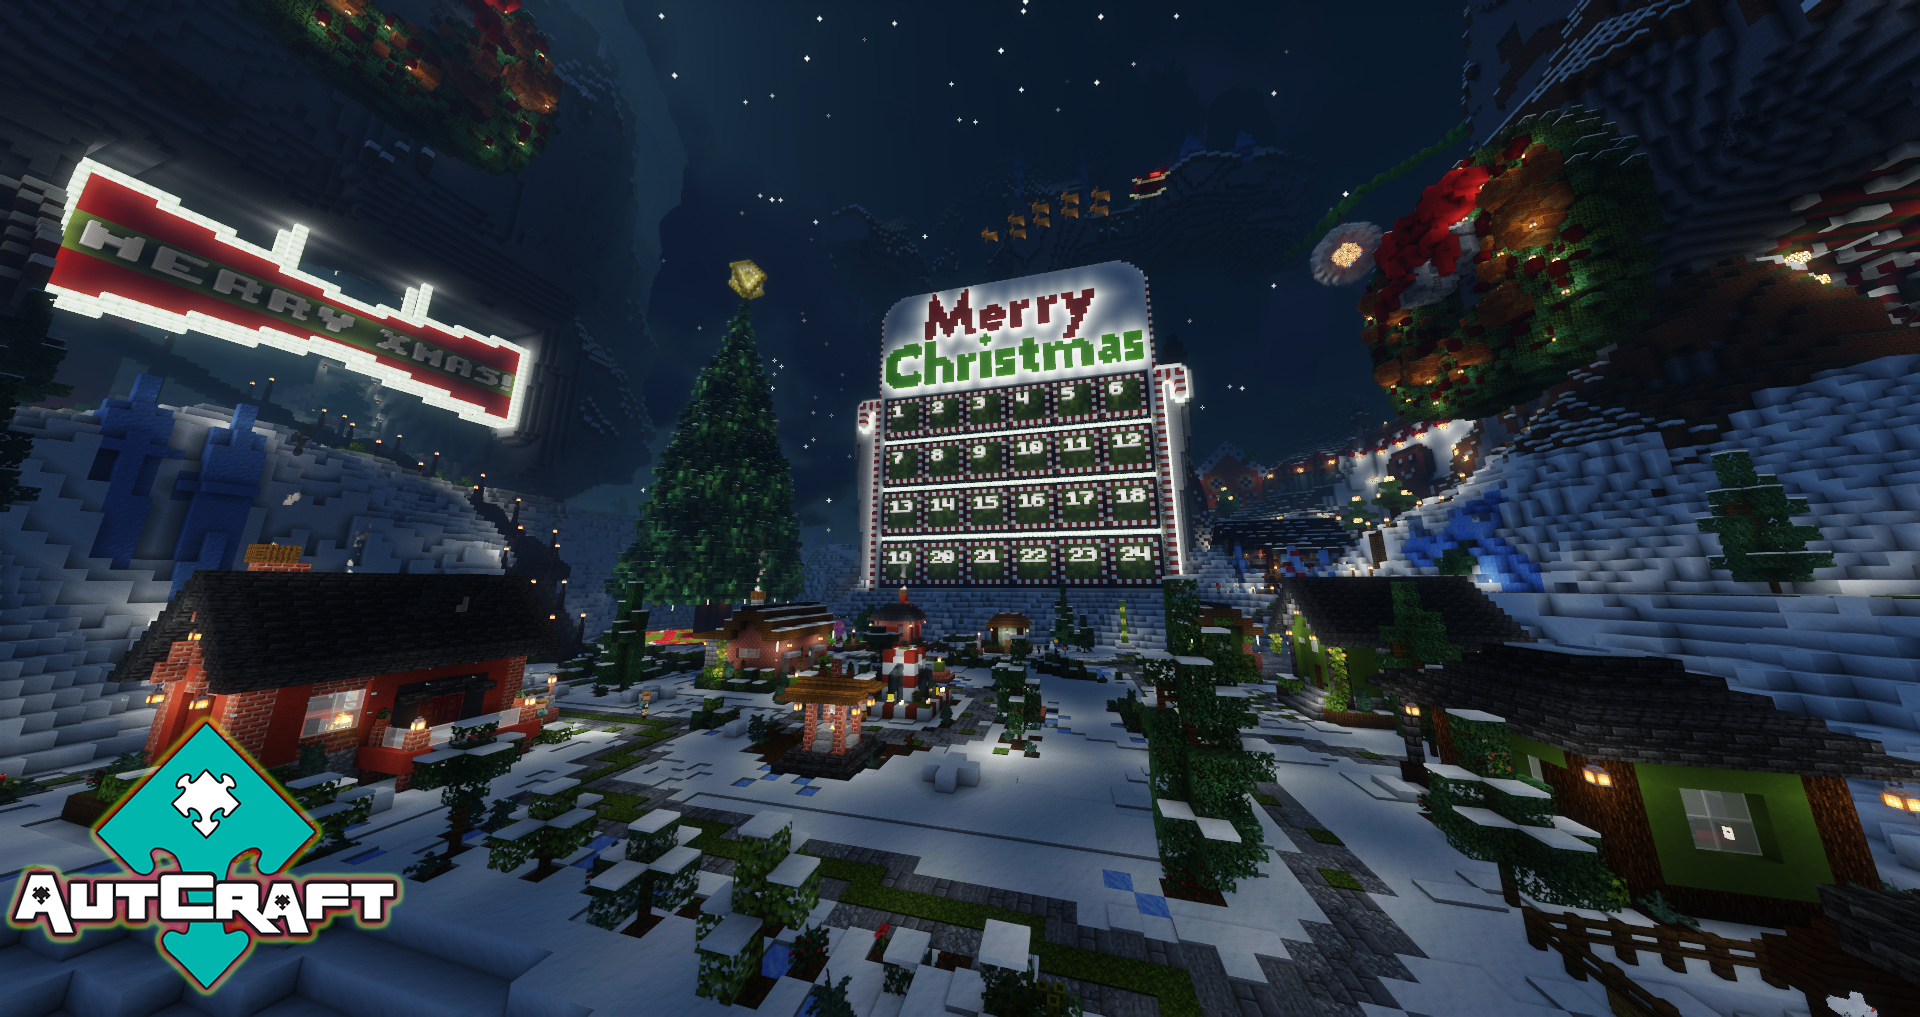 The Autcraft Christmas Village